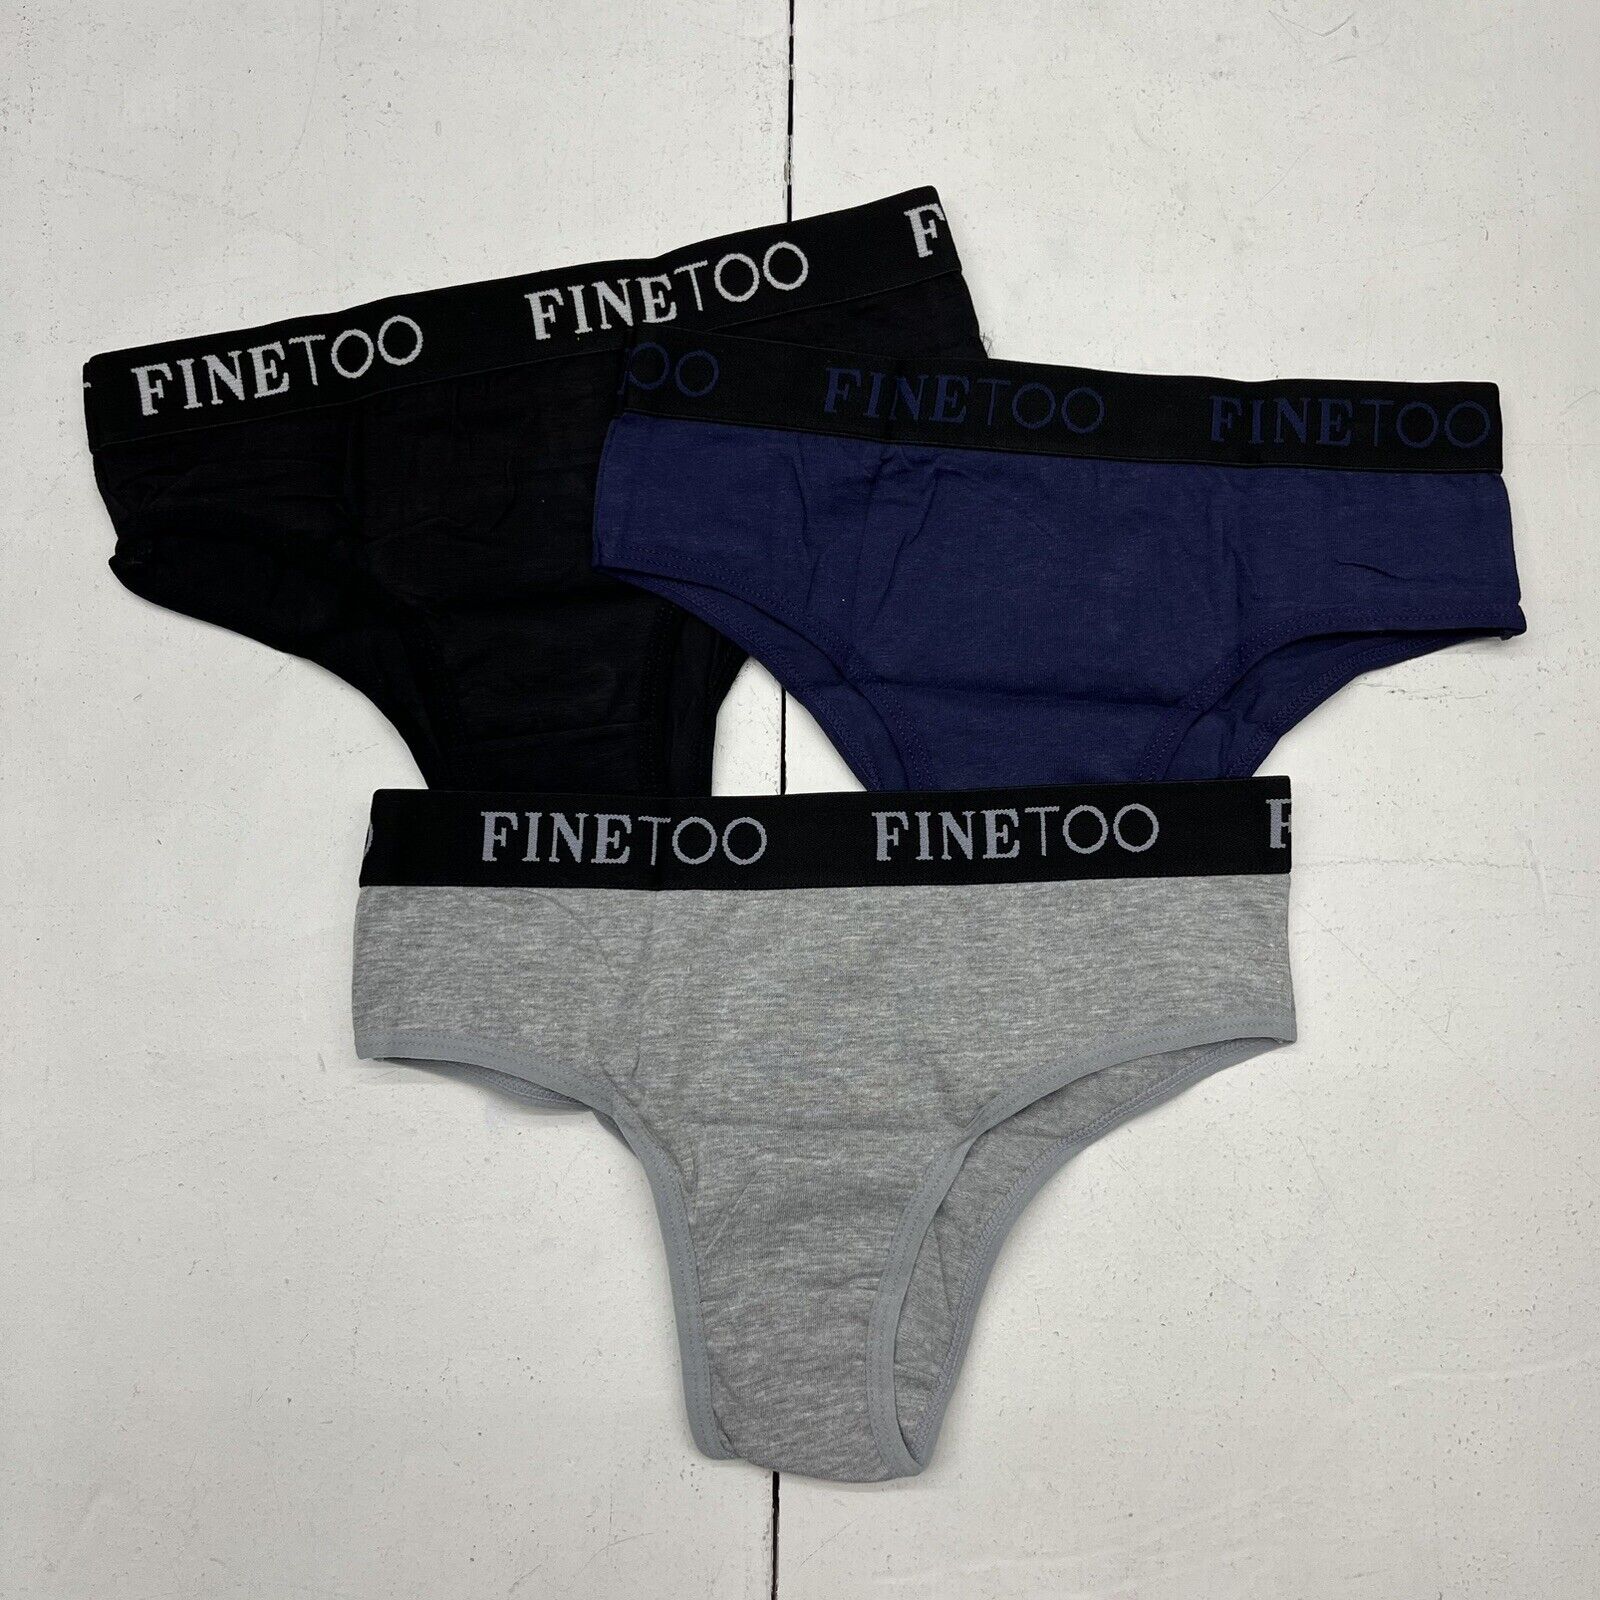 Finetoo 3 Pack Black/Blue/Gray Panties Women's Size Medium NEW - beyond  exchange